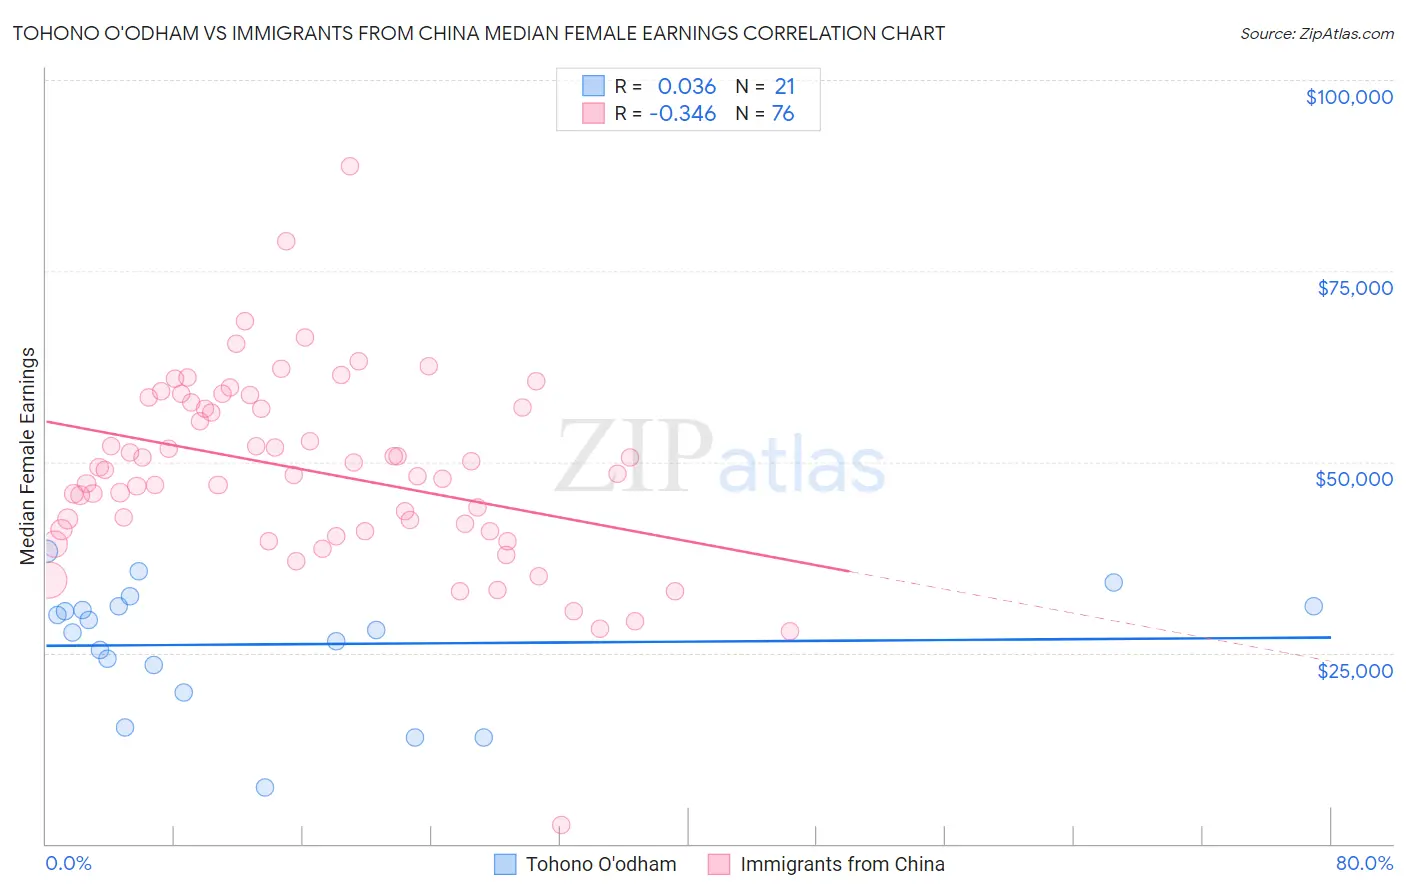 Tohono O'odham vs Immigrants from China Median Female Earnings